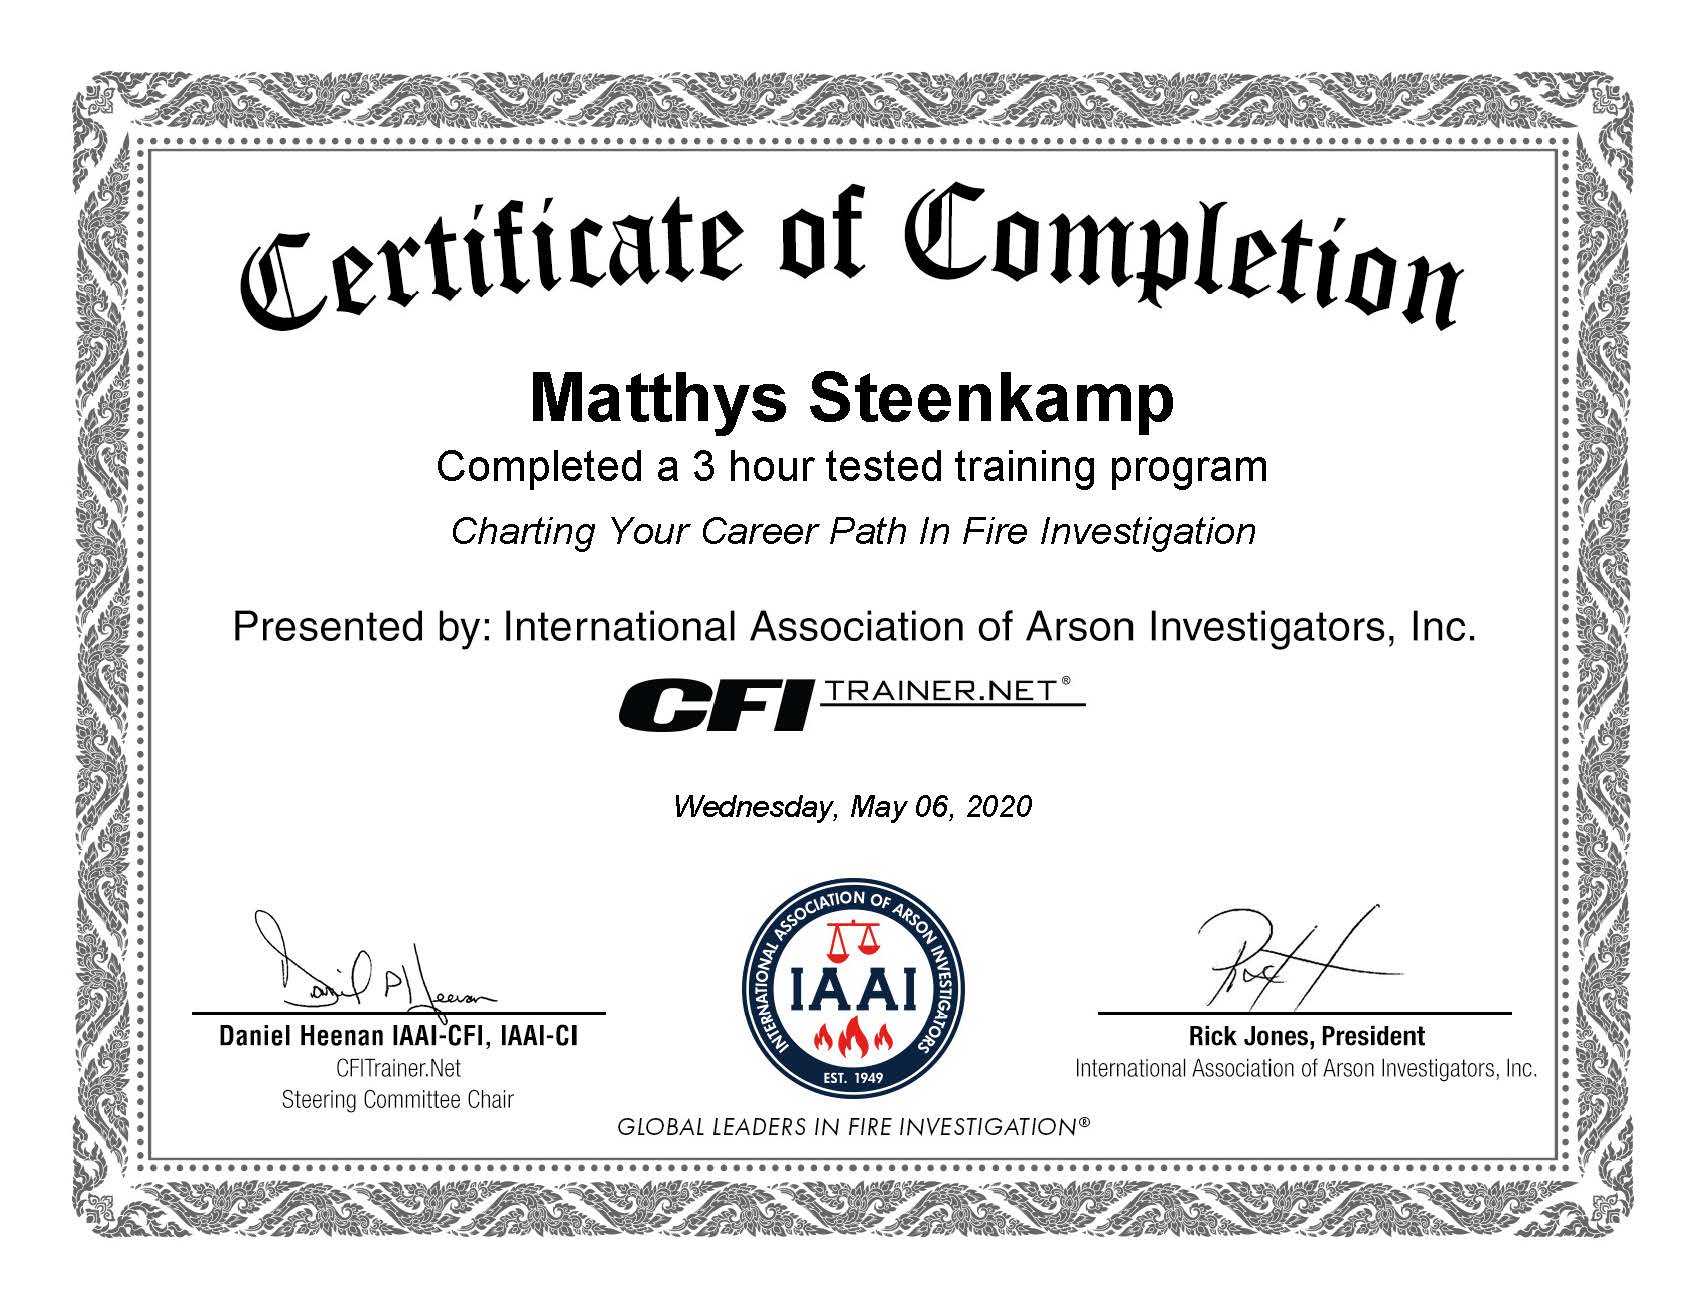 International Association of Arson Investigators, Inc.